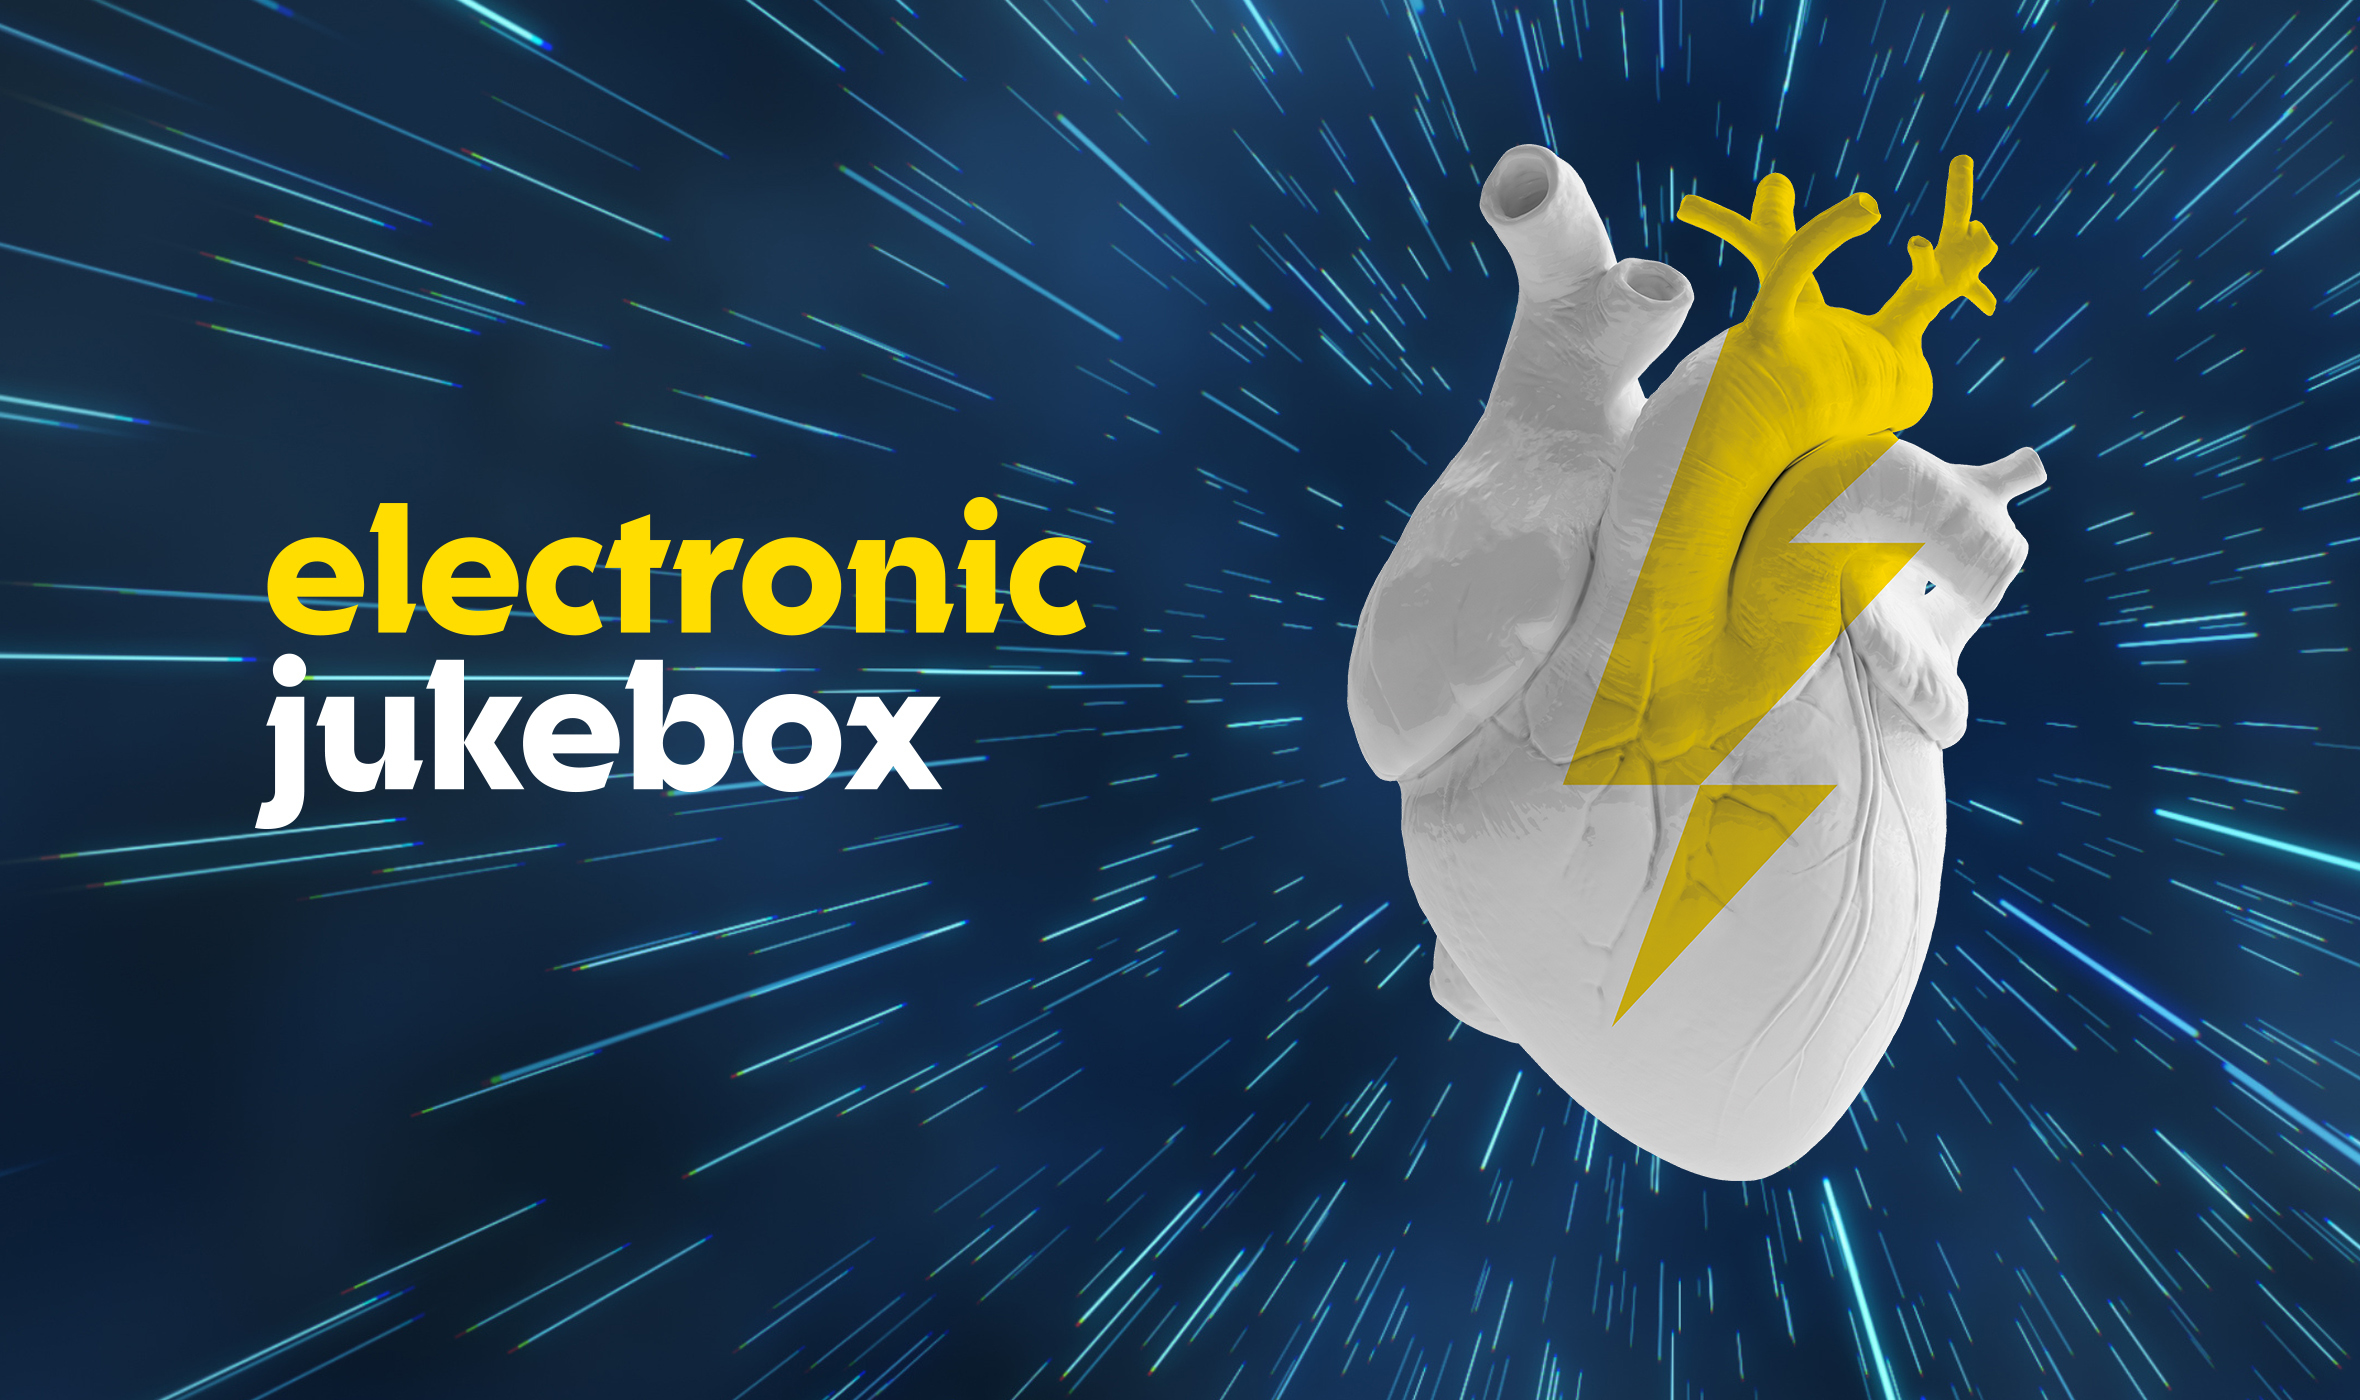 Elektronic Jukebox, Logoentwicklung, Corporate Design, Bildkonzept, Keyvisual, Flash, Blitz, DJ, elektronische Musik, Heartbeat Booster